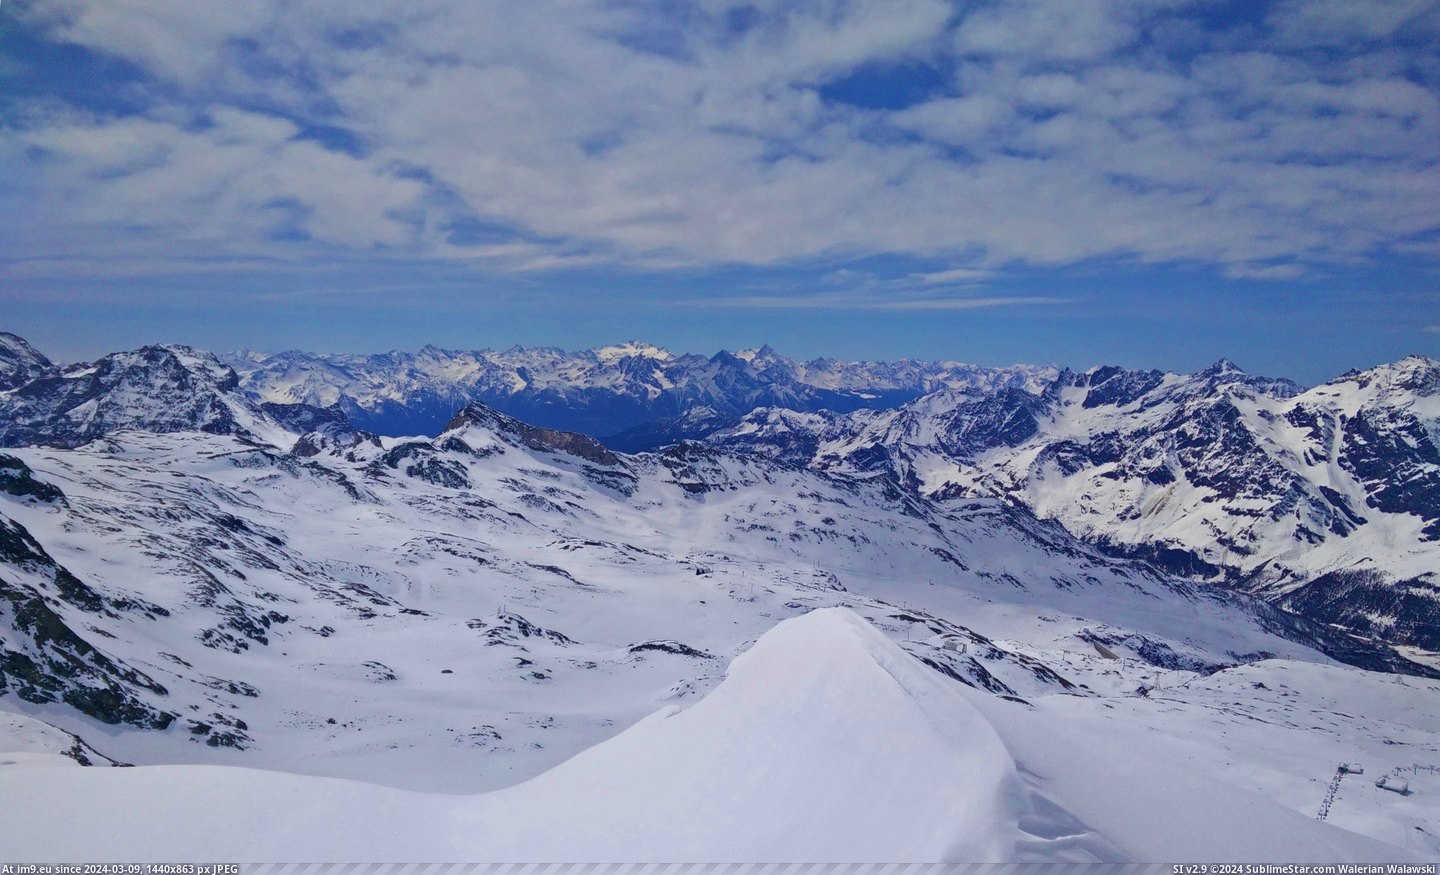 #Italian #Switzerland #Unedited #Alps #Matterhorn [Earthporn] Italian Alps, as seen from the Matterhorn, Switzerland. Unedited.  (4048x2440) Pic. (Image of album My r/EARTHPORN favs))